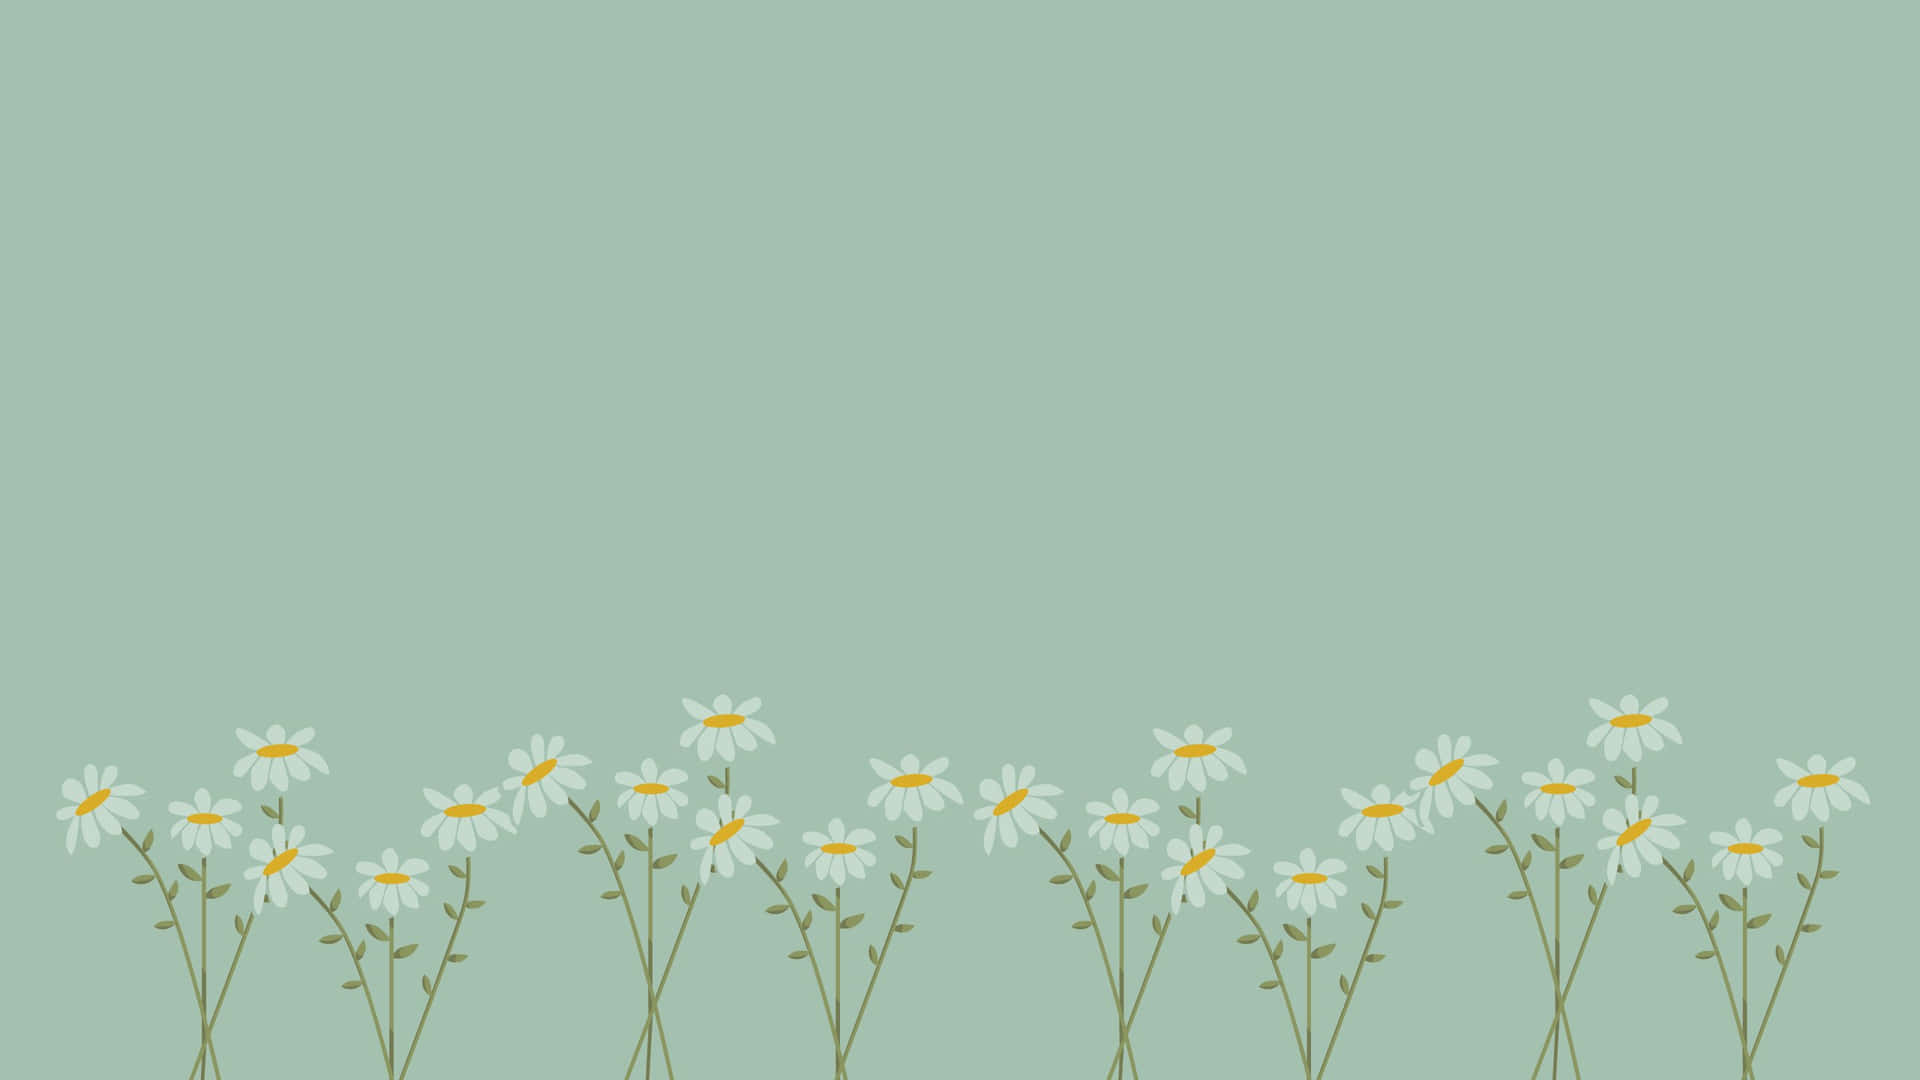 Pastel Daisy Field Aesthetic Wallpaper